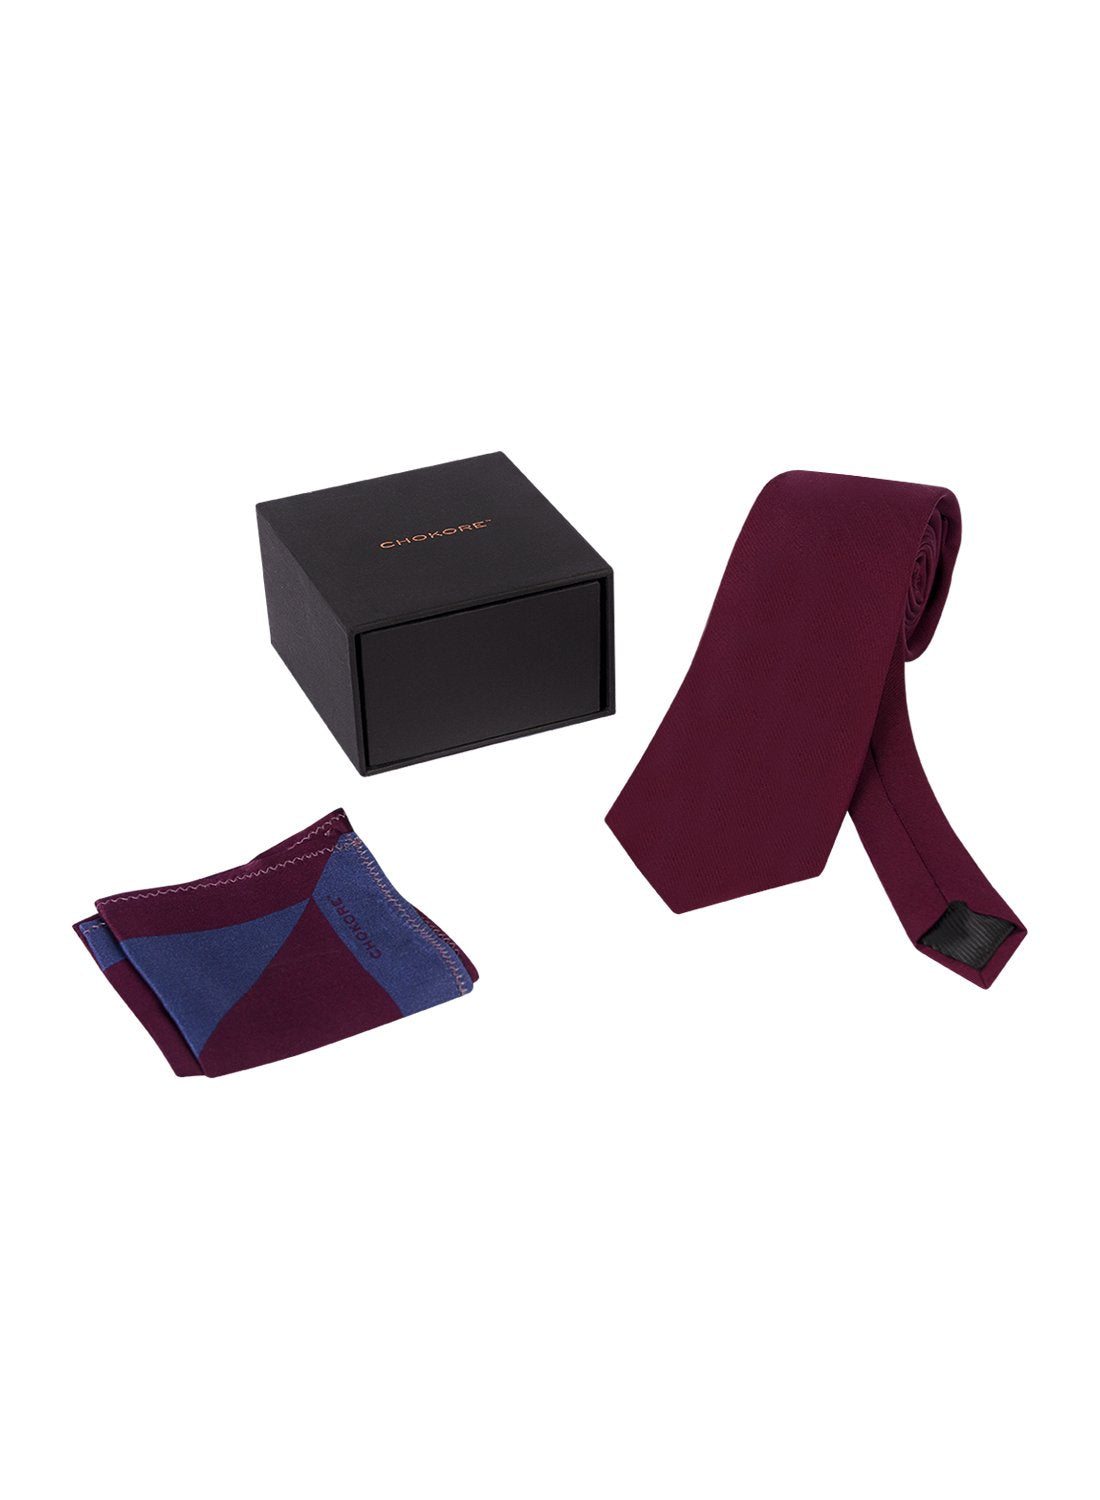 Chokore Burgundy color Plain Silk Tie & Two-in-one Burgundy & Blue Pure Satin Silk Pocket Square set